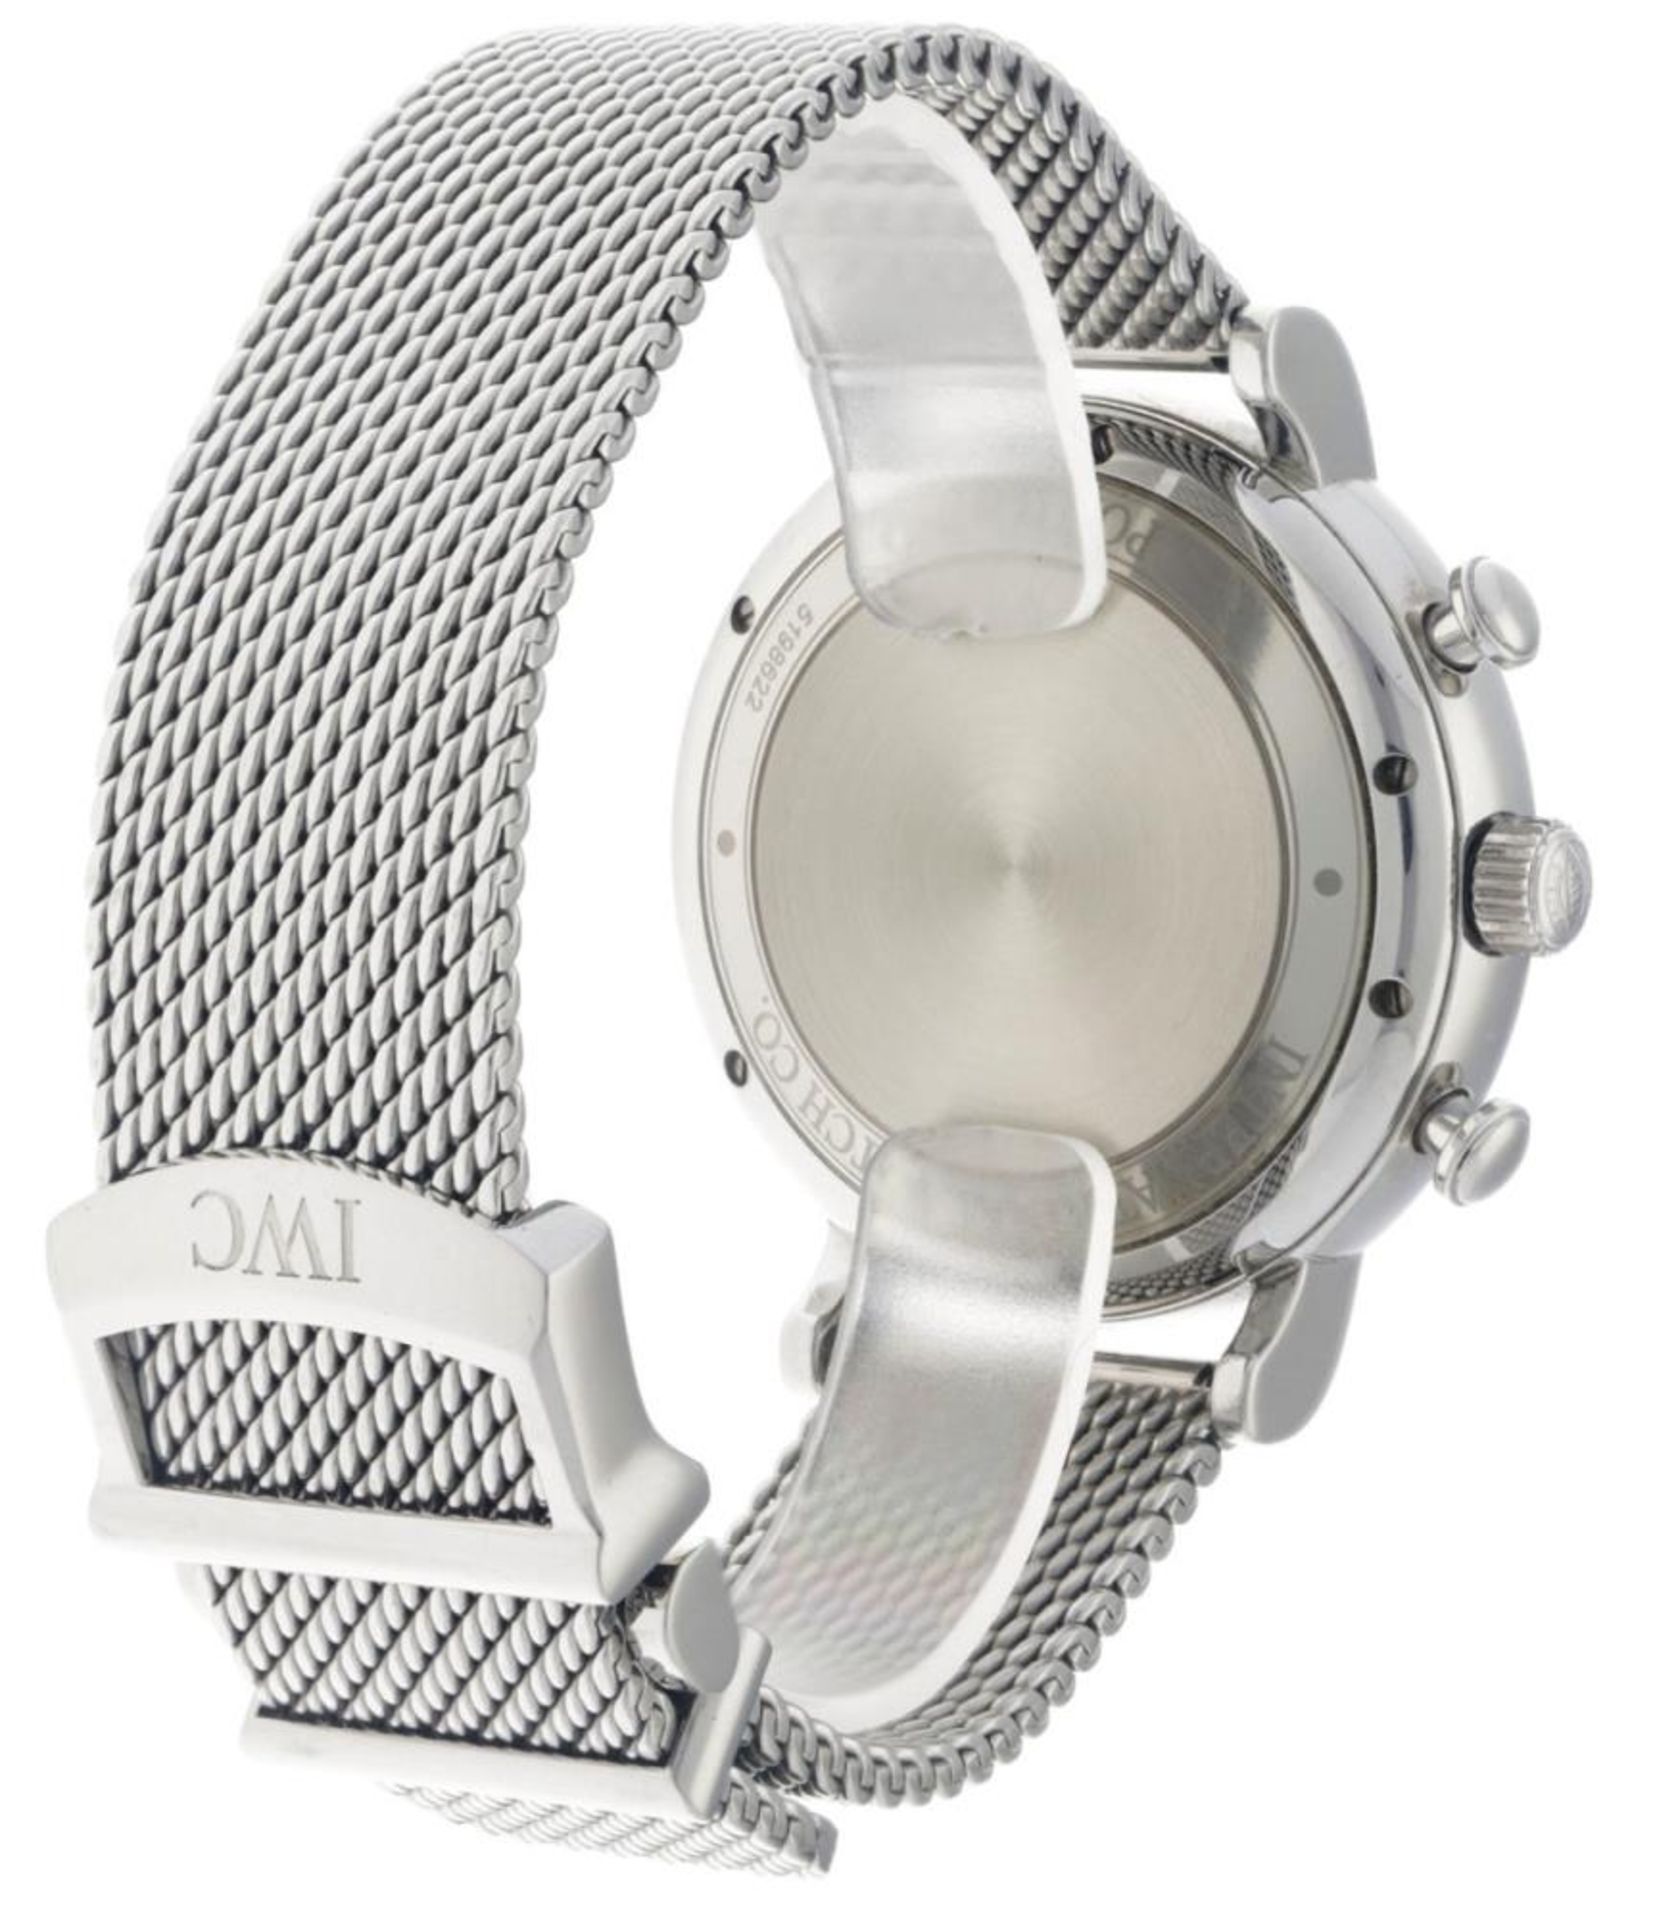 IWC Portofino Chronograph IW391010 - Men's watch - 2014. - Image 3 of 7